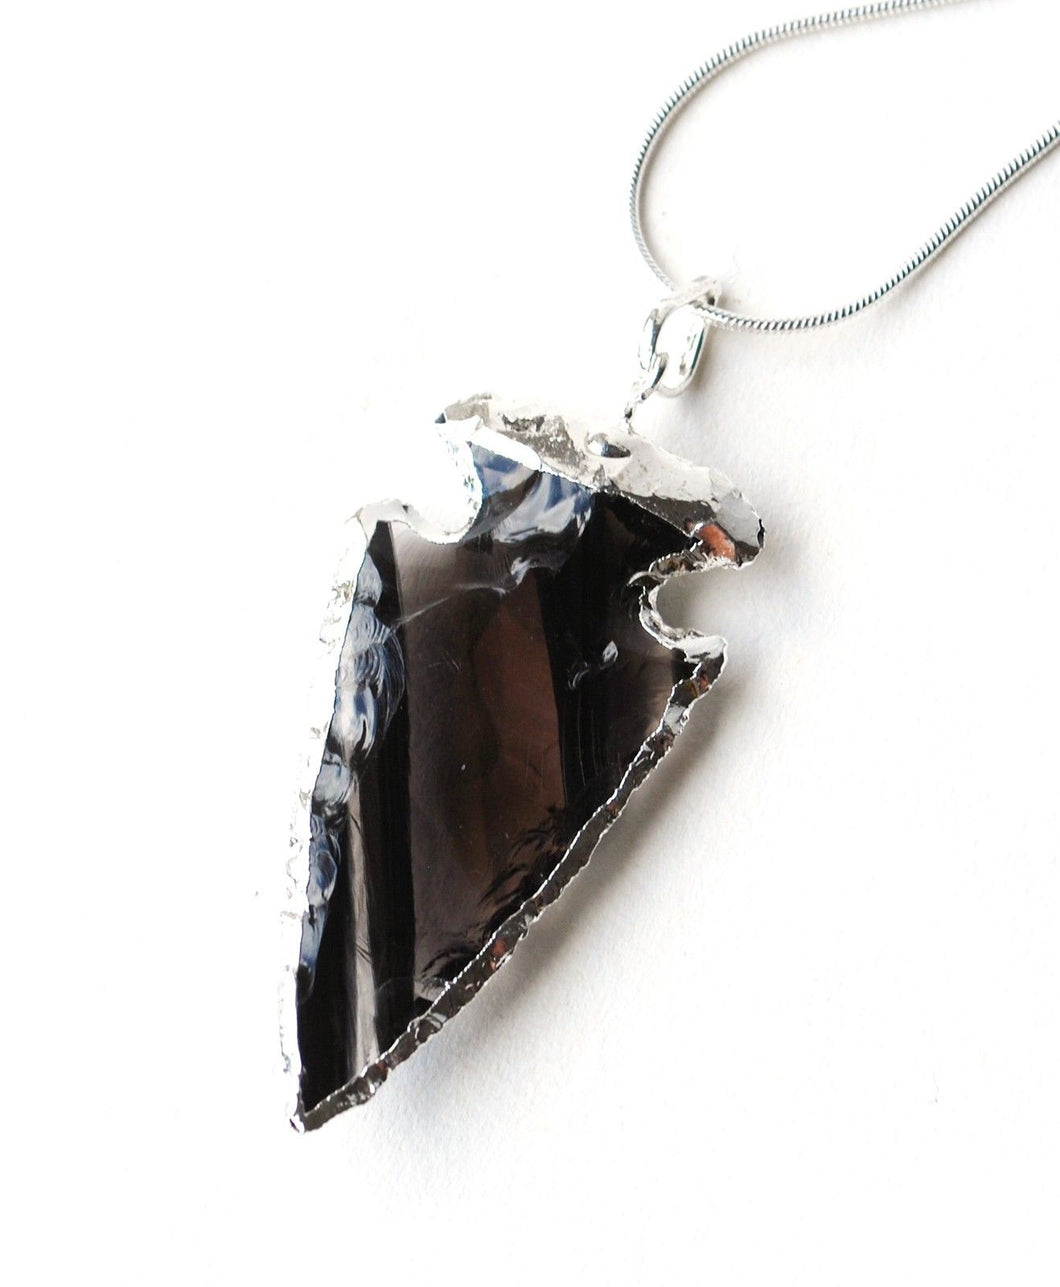 Electroplated Black Obsidian Crystal Arrowhead Pendant (Dragon Glass) - Krystal Gifts UK